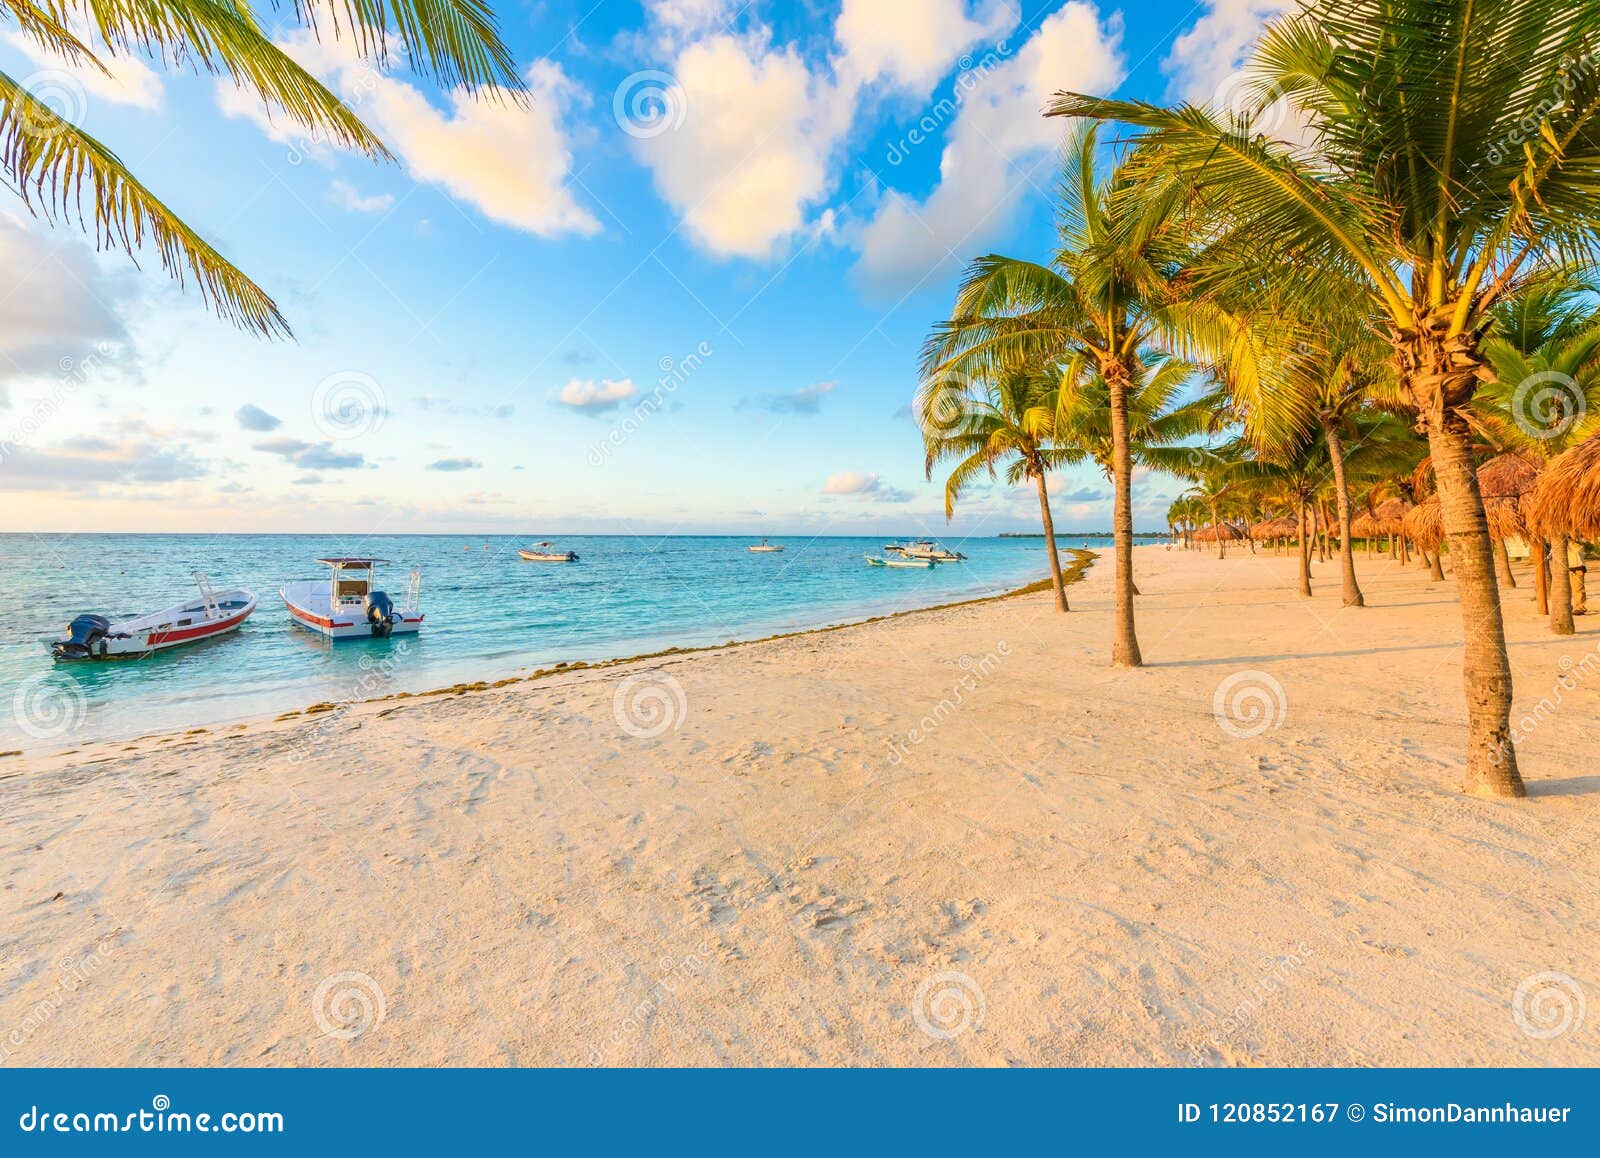 sunrise at akumal beach, paradise bay at riviera maya, caribbean